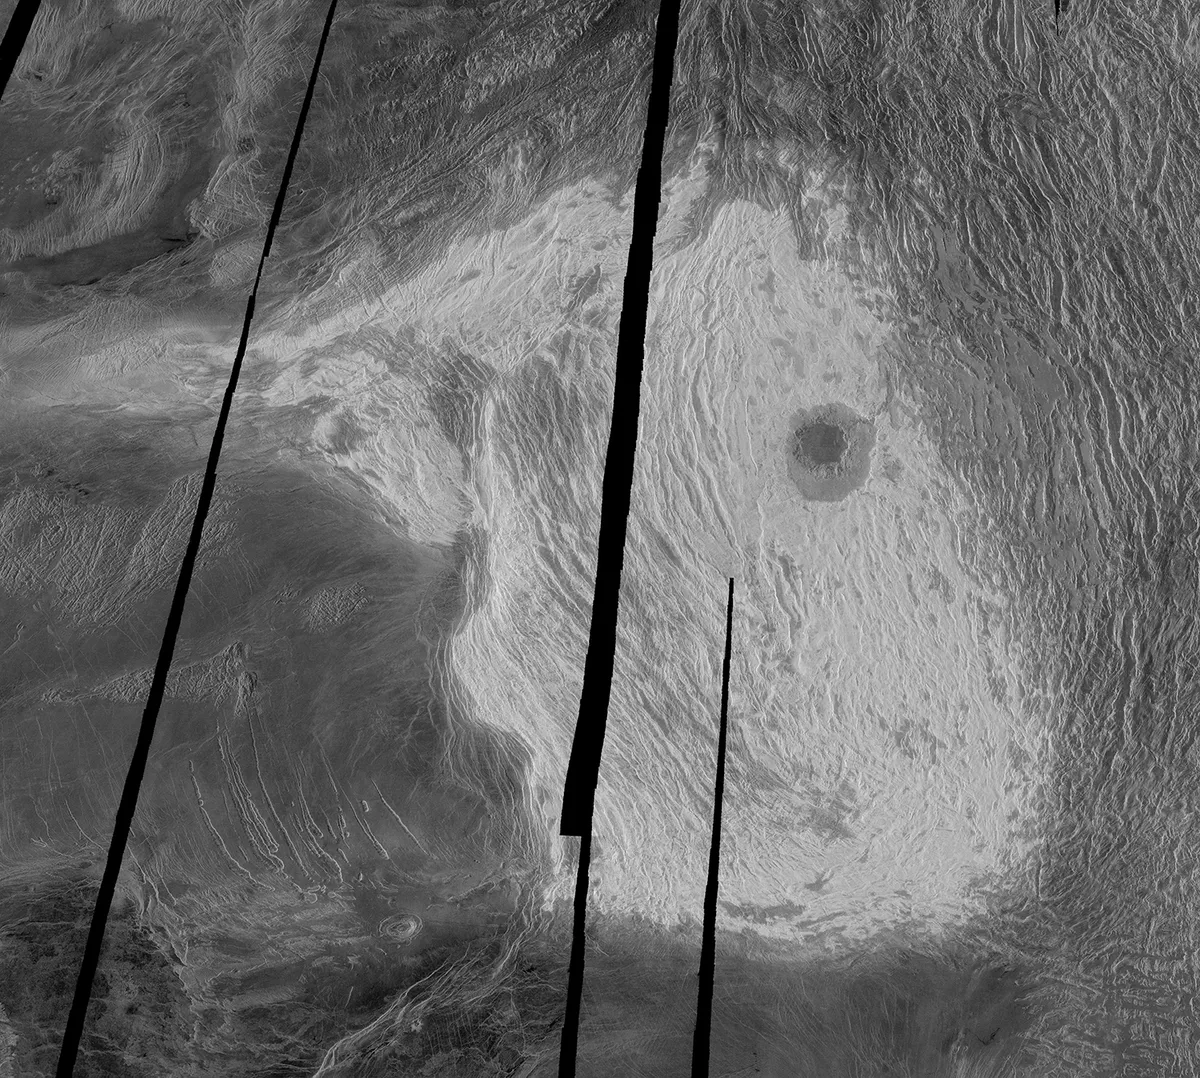 Venus Maxwell Montes. Credit: NASA/JPL